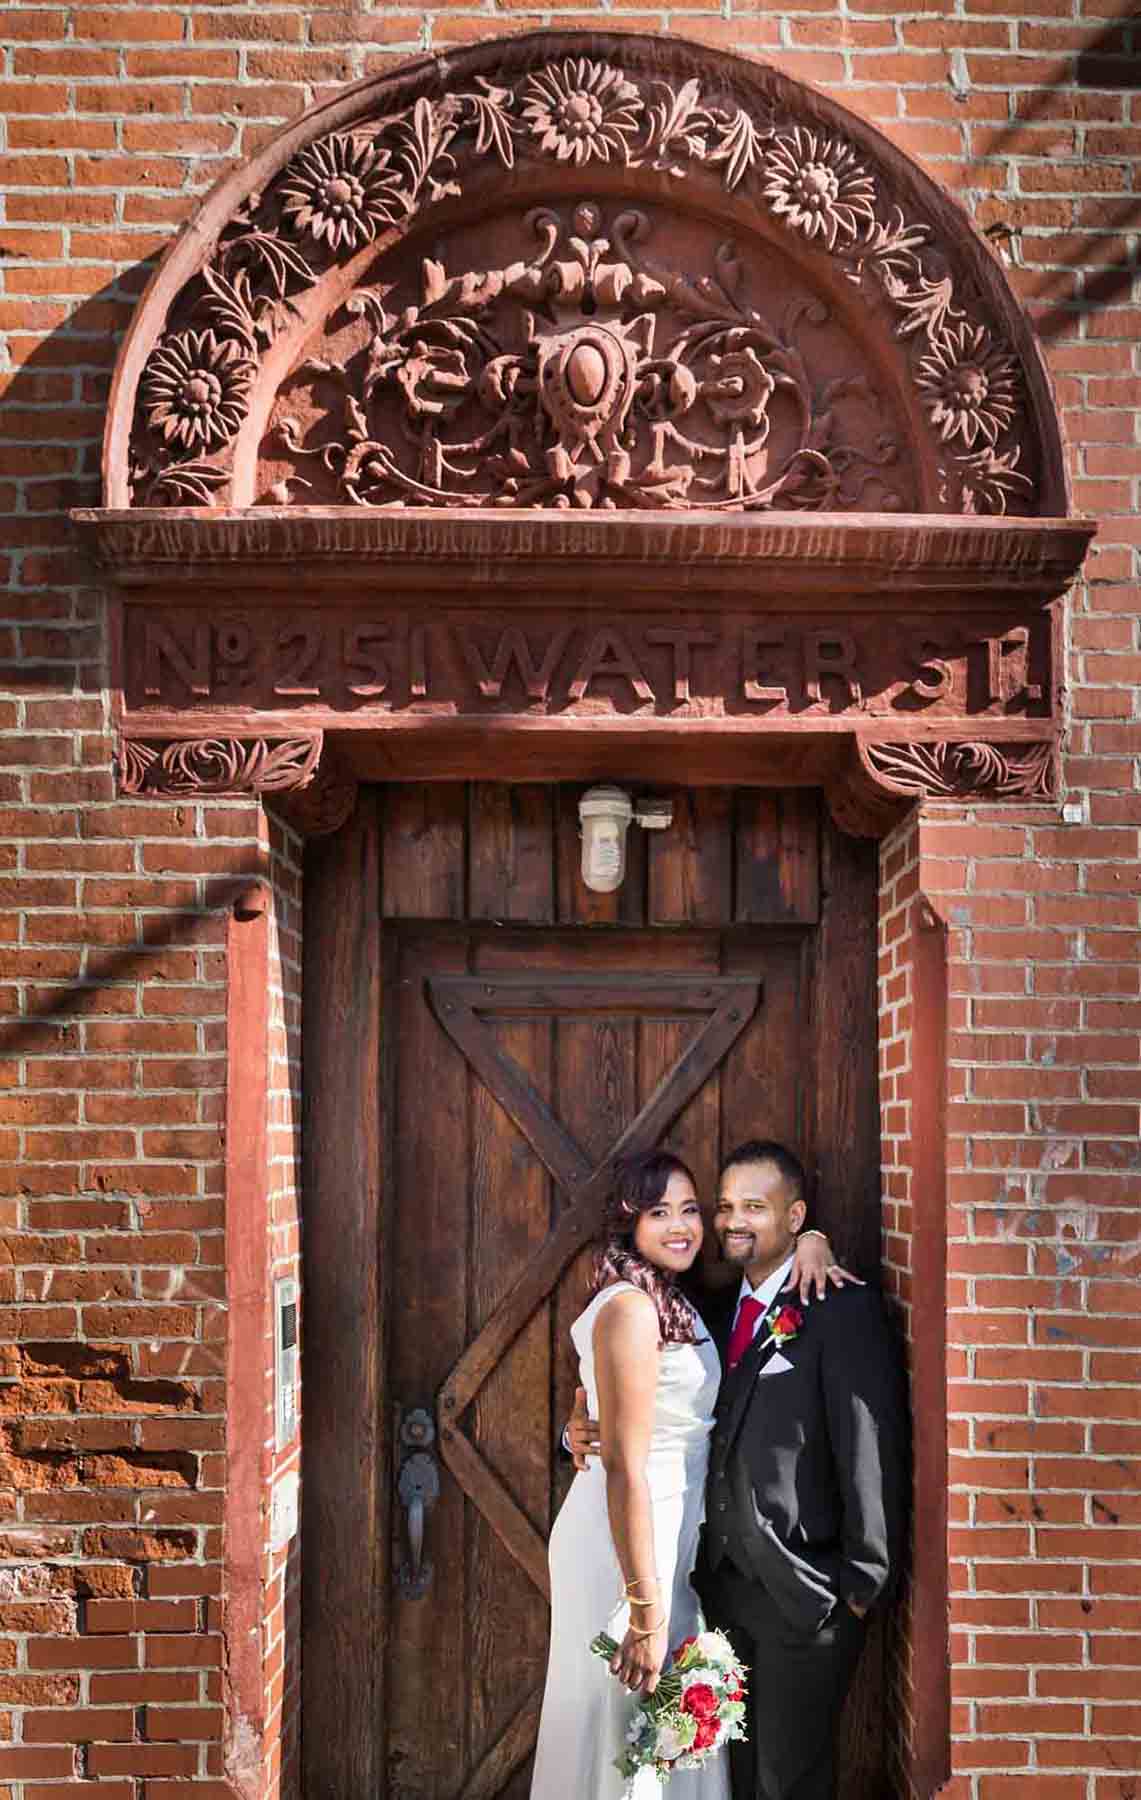 Bride and groom hugging in doorway of brick building